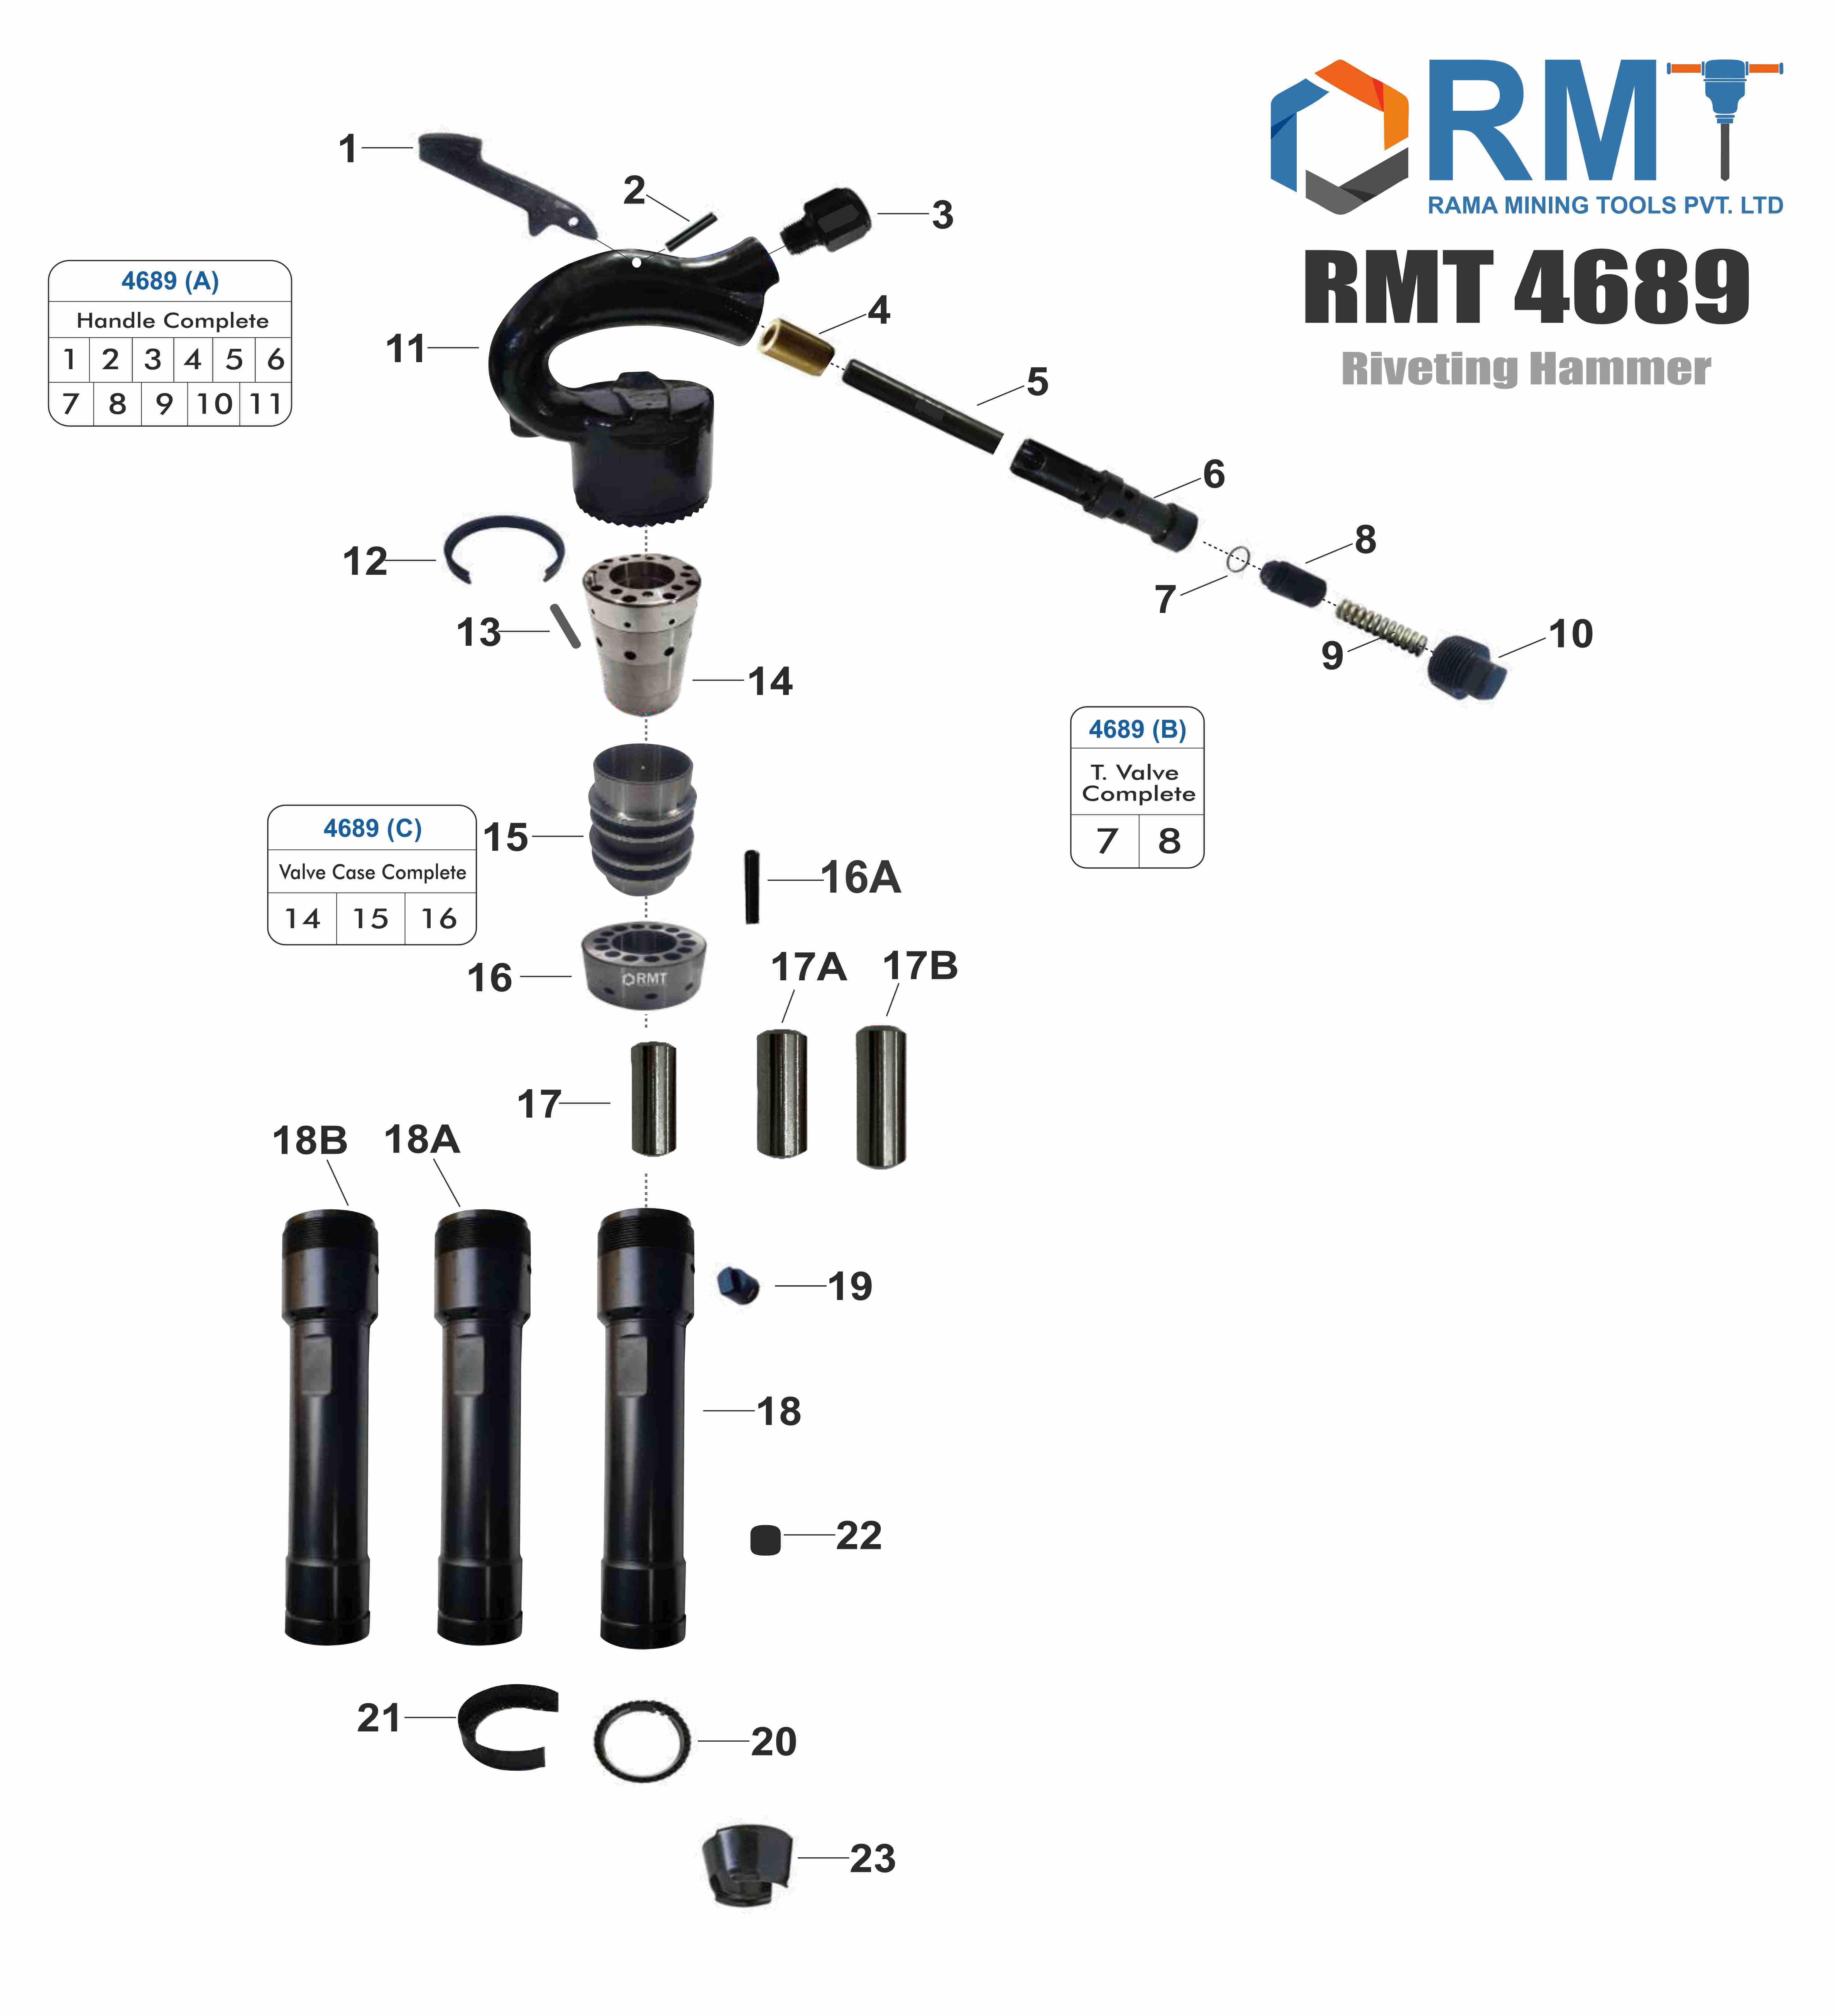 RMT 4689 Riveting Hammer